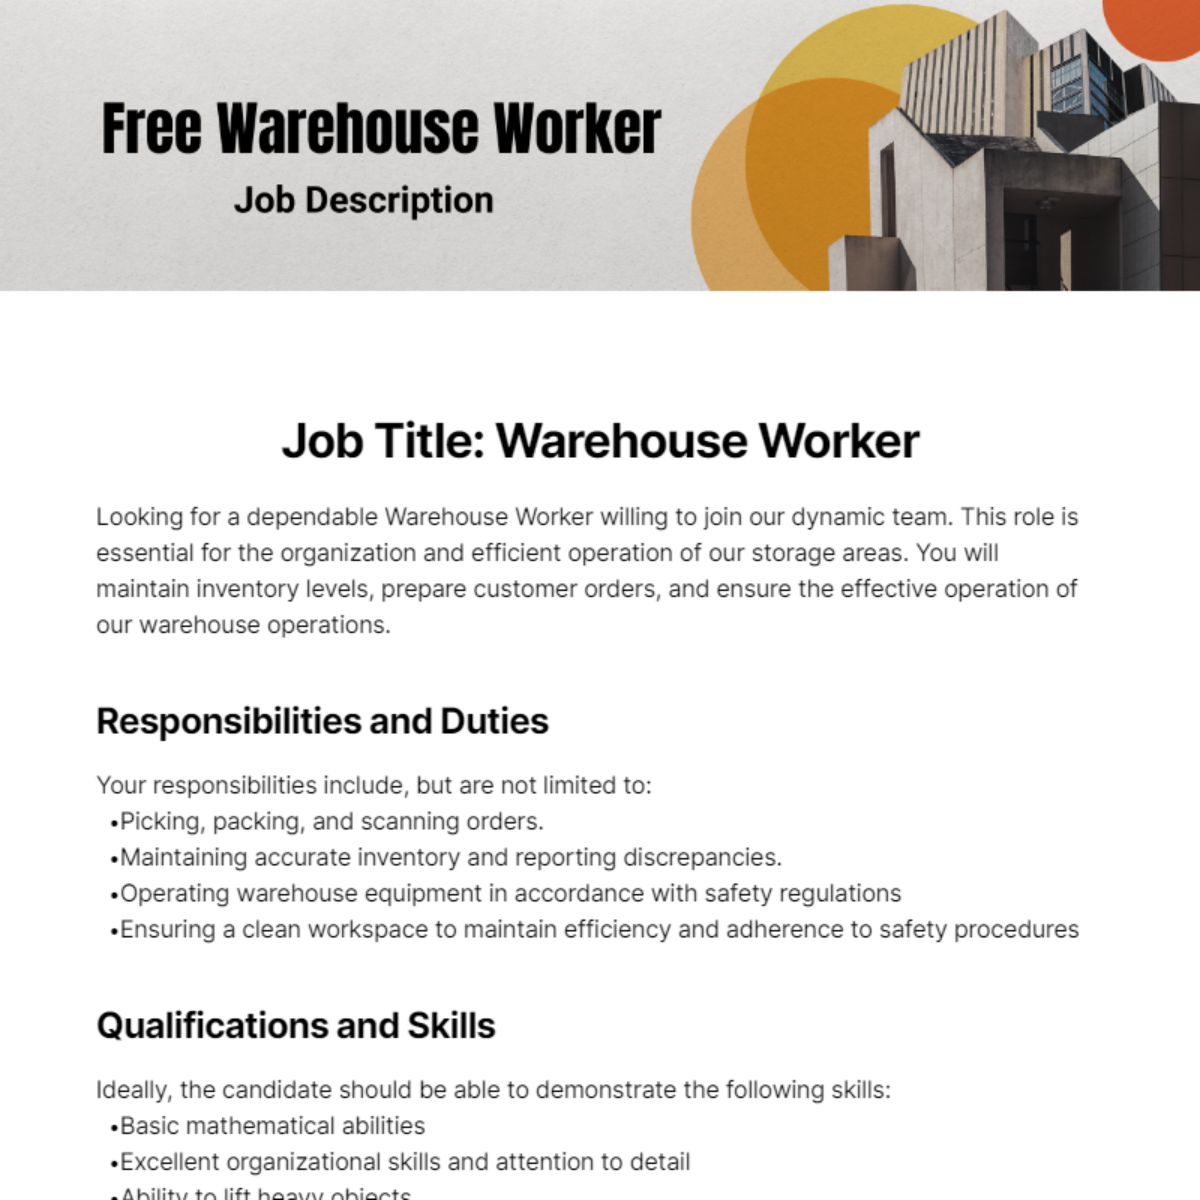 Free Warehouse Worker Job Description Template